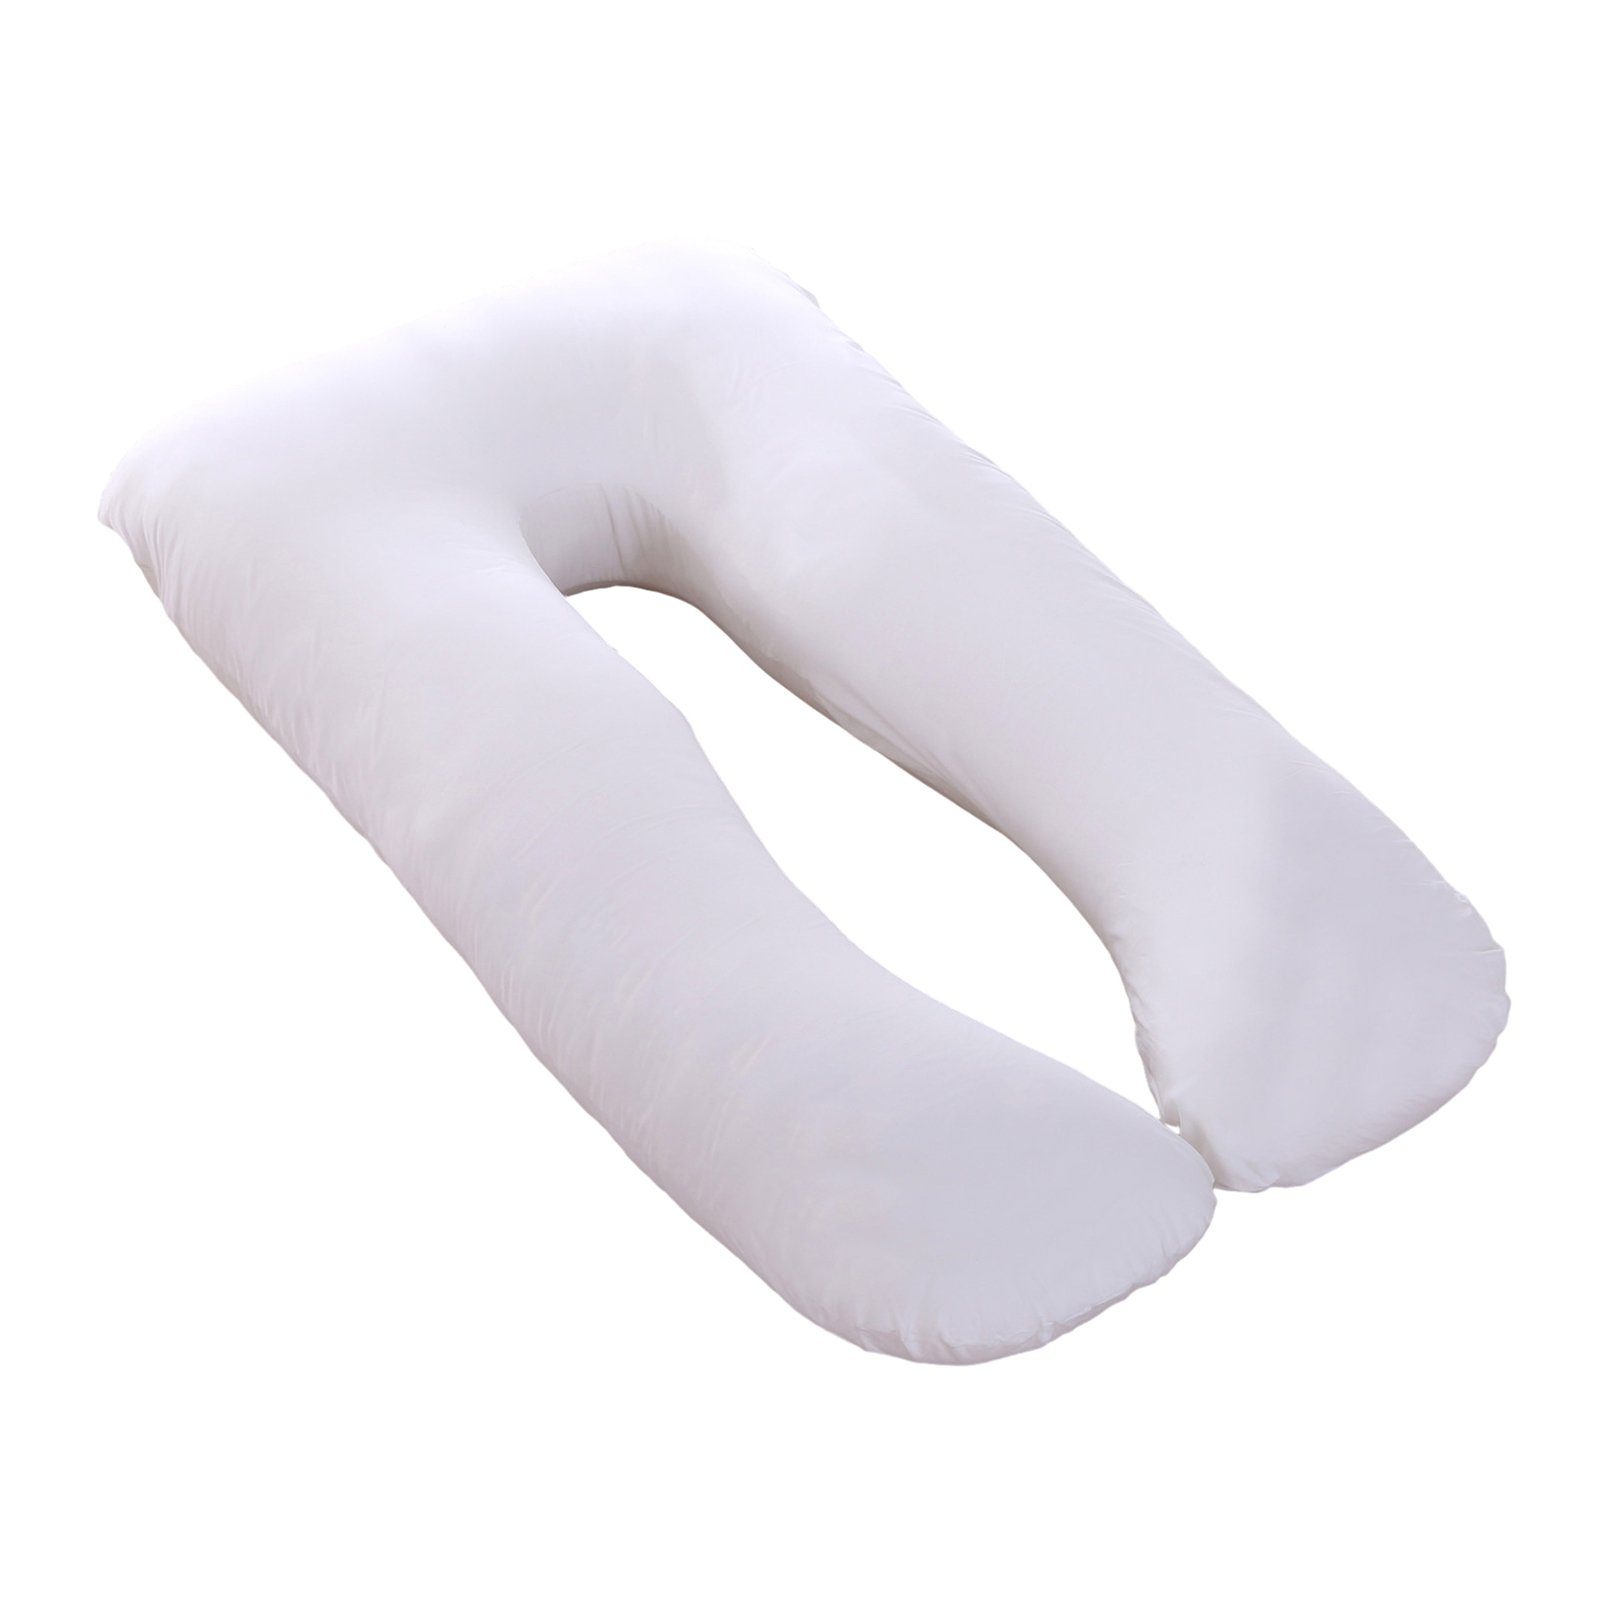 Weiß Baumwoll-Kissenbezug Waschbarer, Für 70x130cm U-förmiges Blusmart Mutterschaftskissen, Kissenbezug